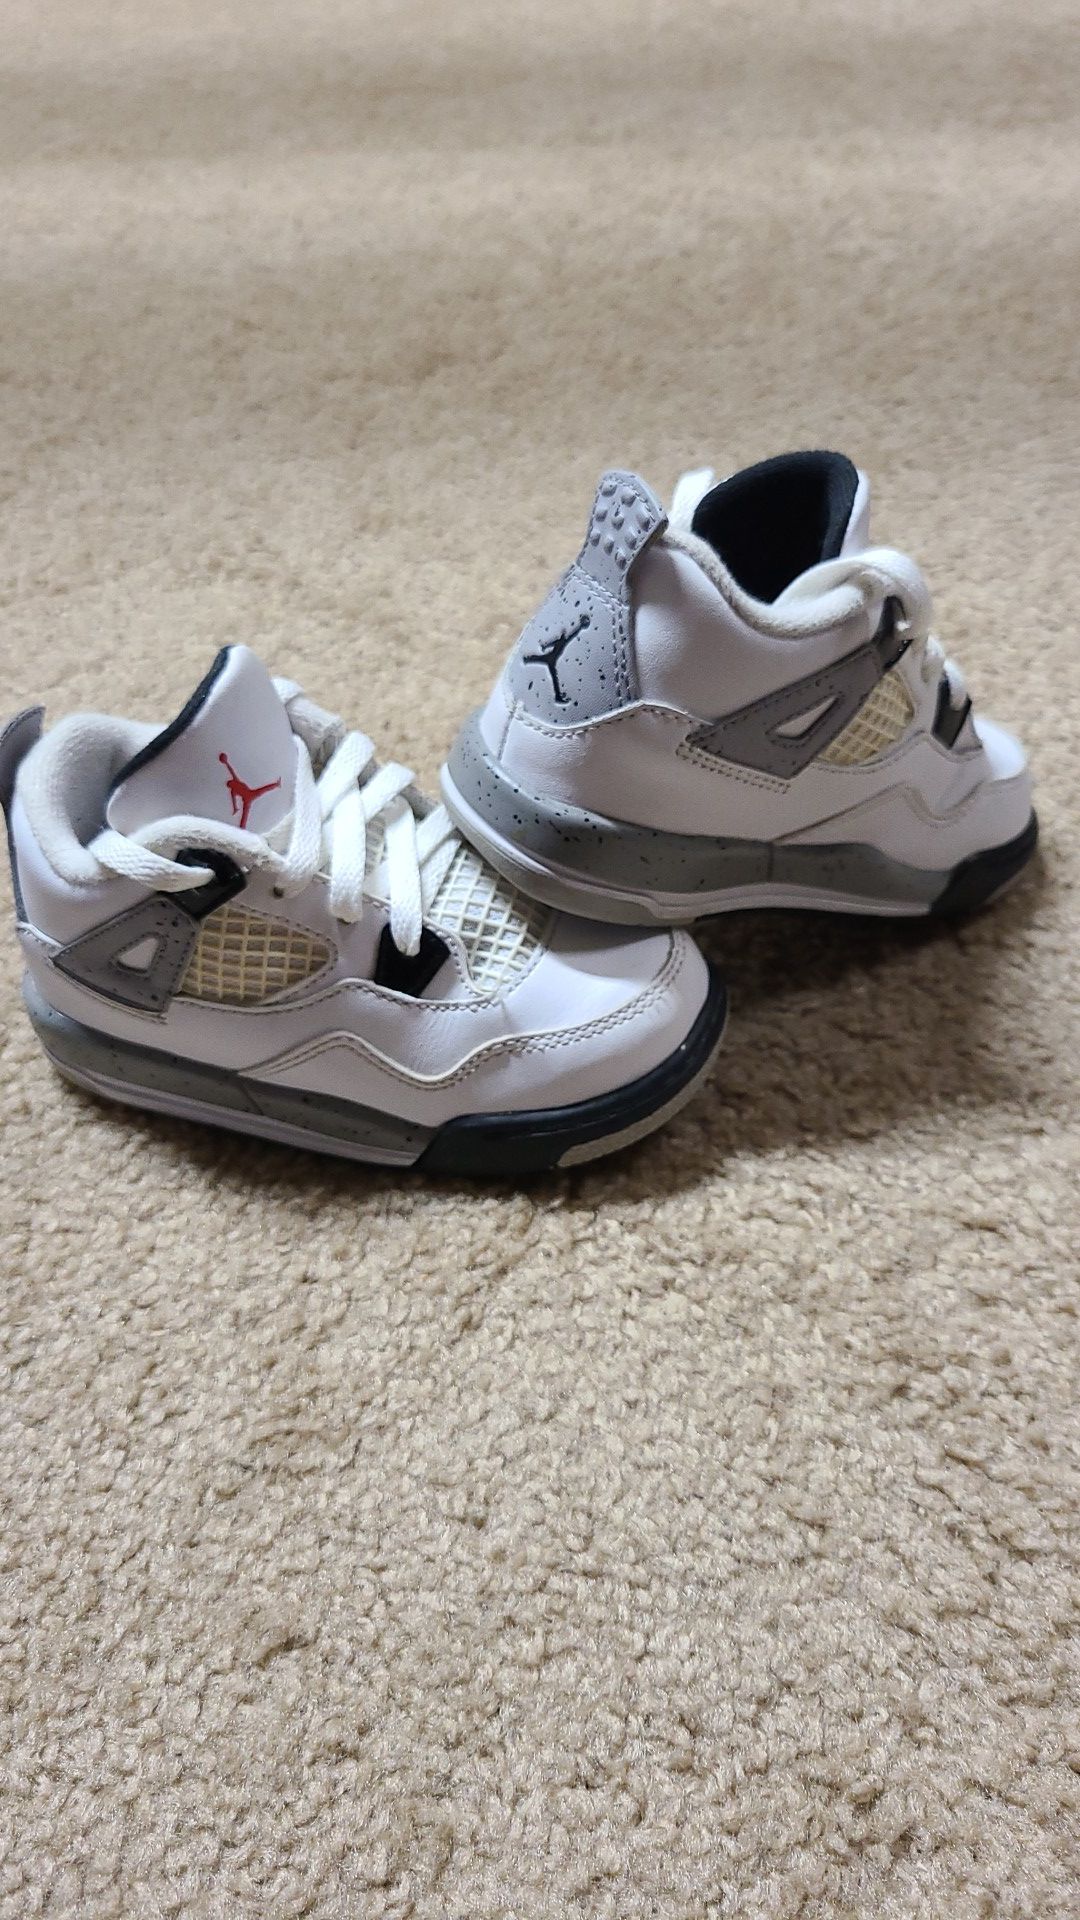 Nike Jordan IV Retro 4 white cemen6